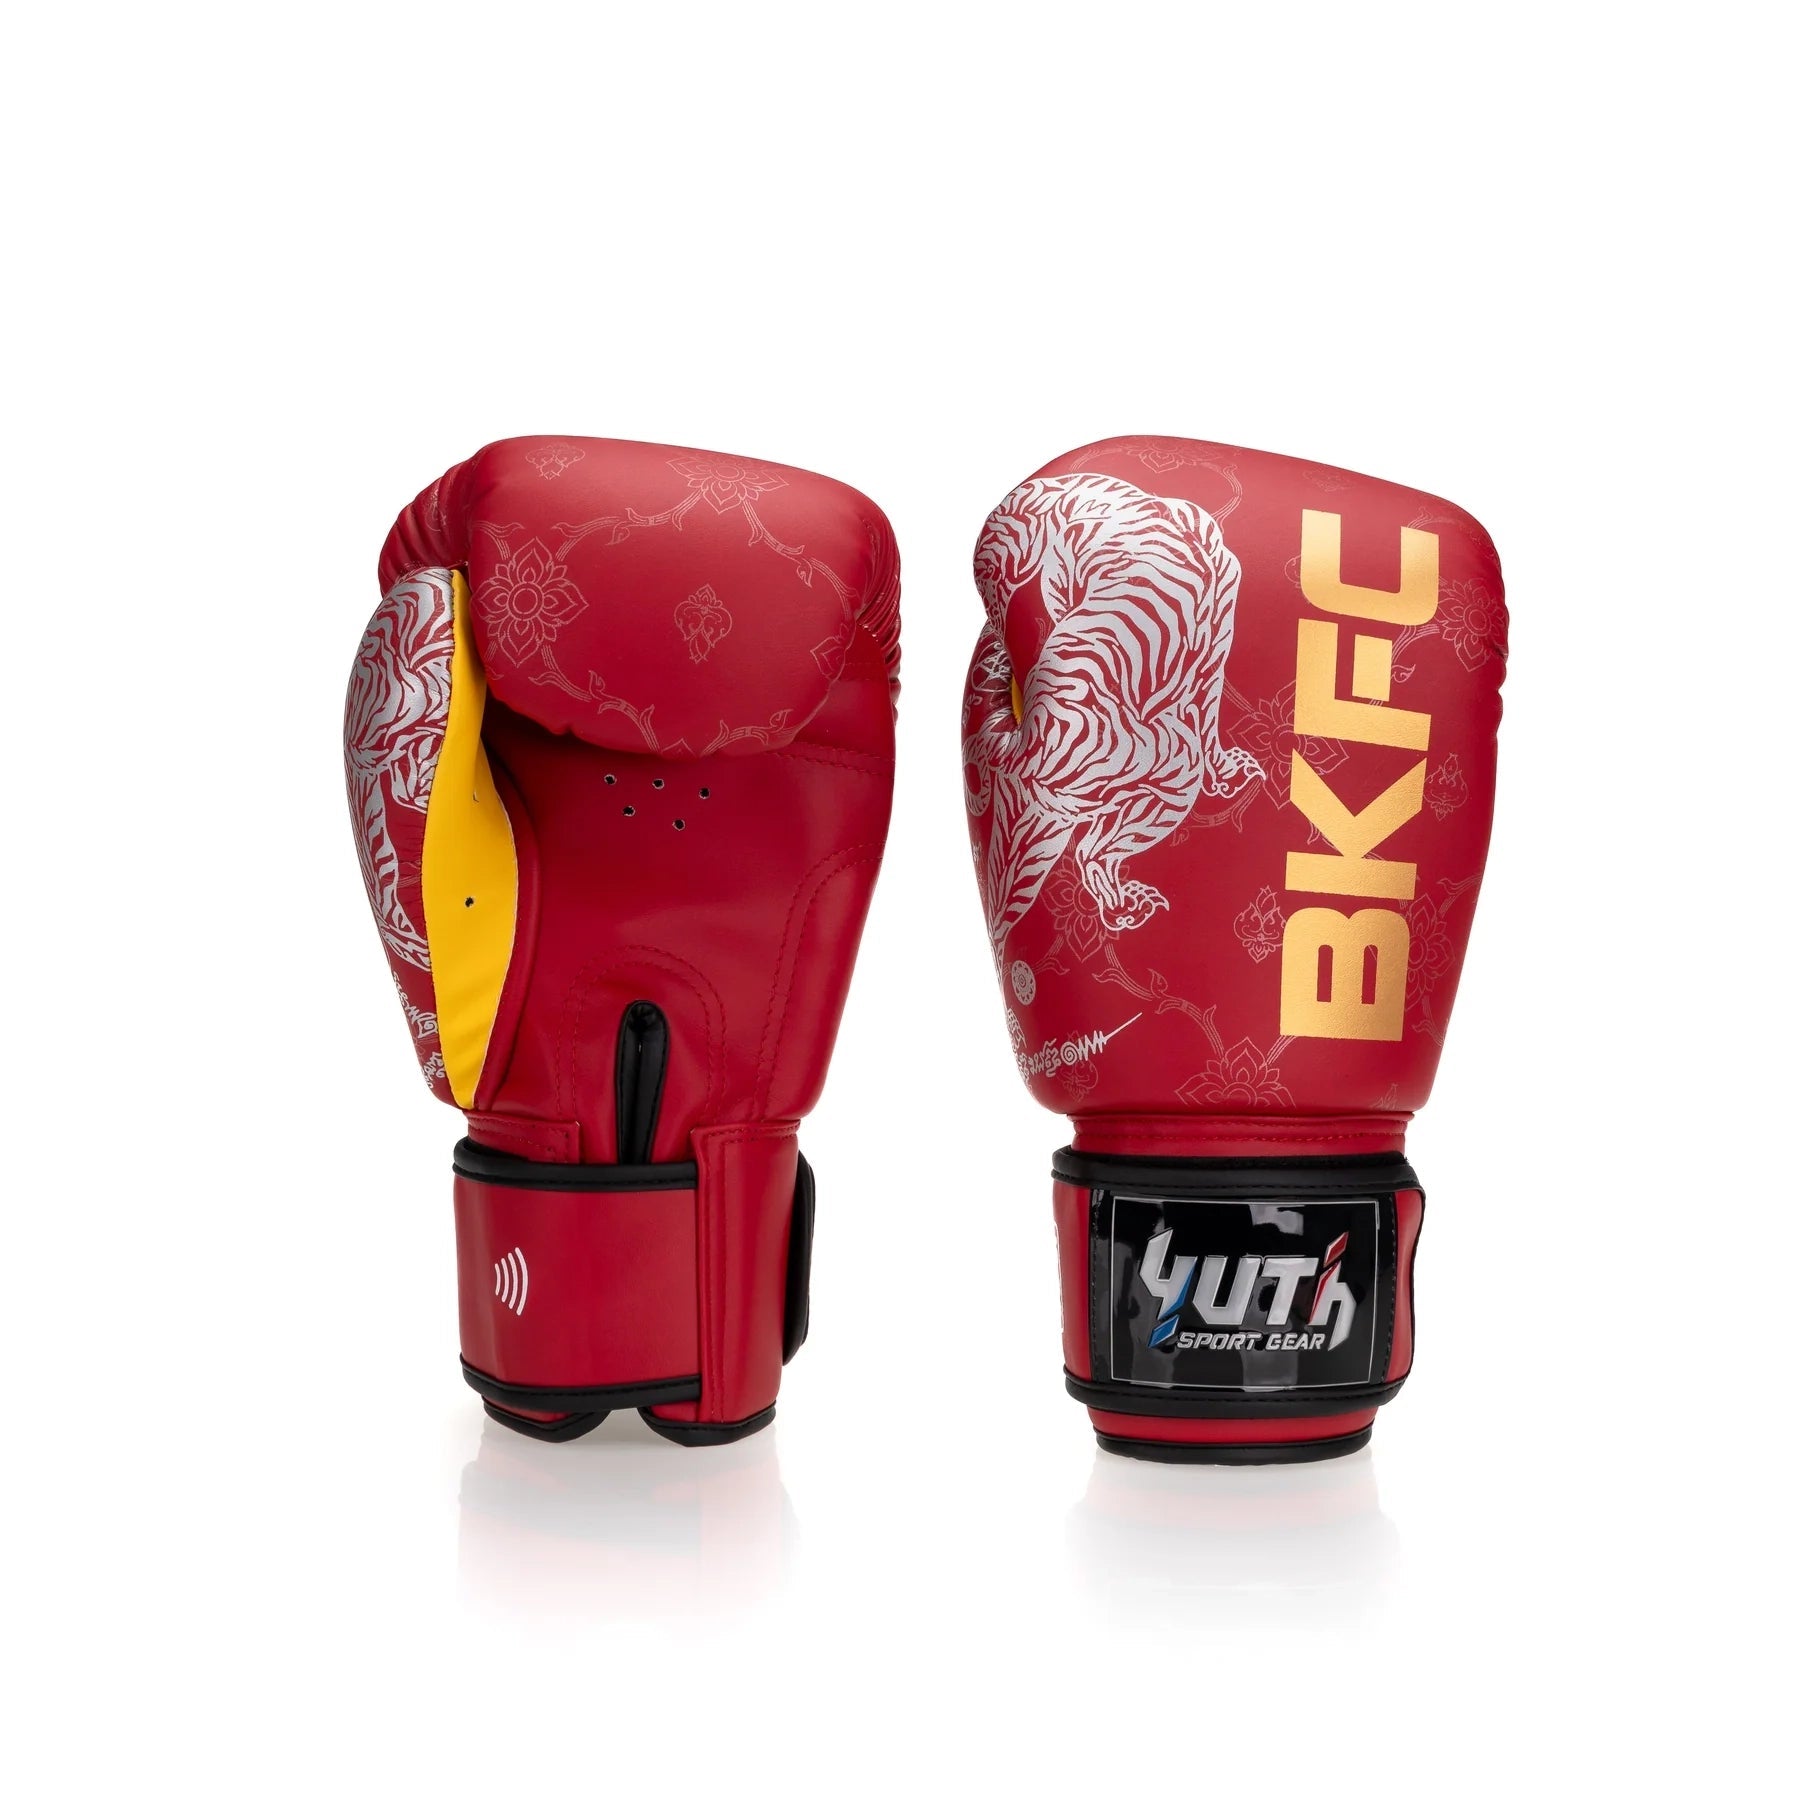 Yuth X BKFC Boxing Gloves - Fight.ShopBoxing GlovesBKFCRed8oz